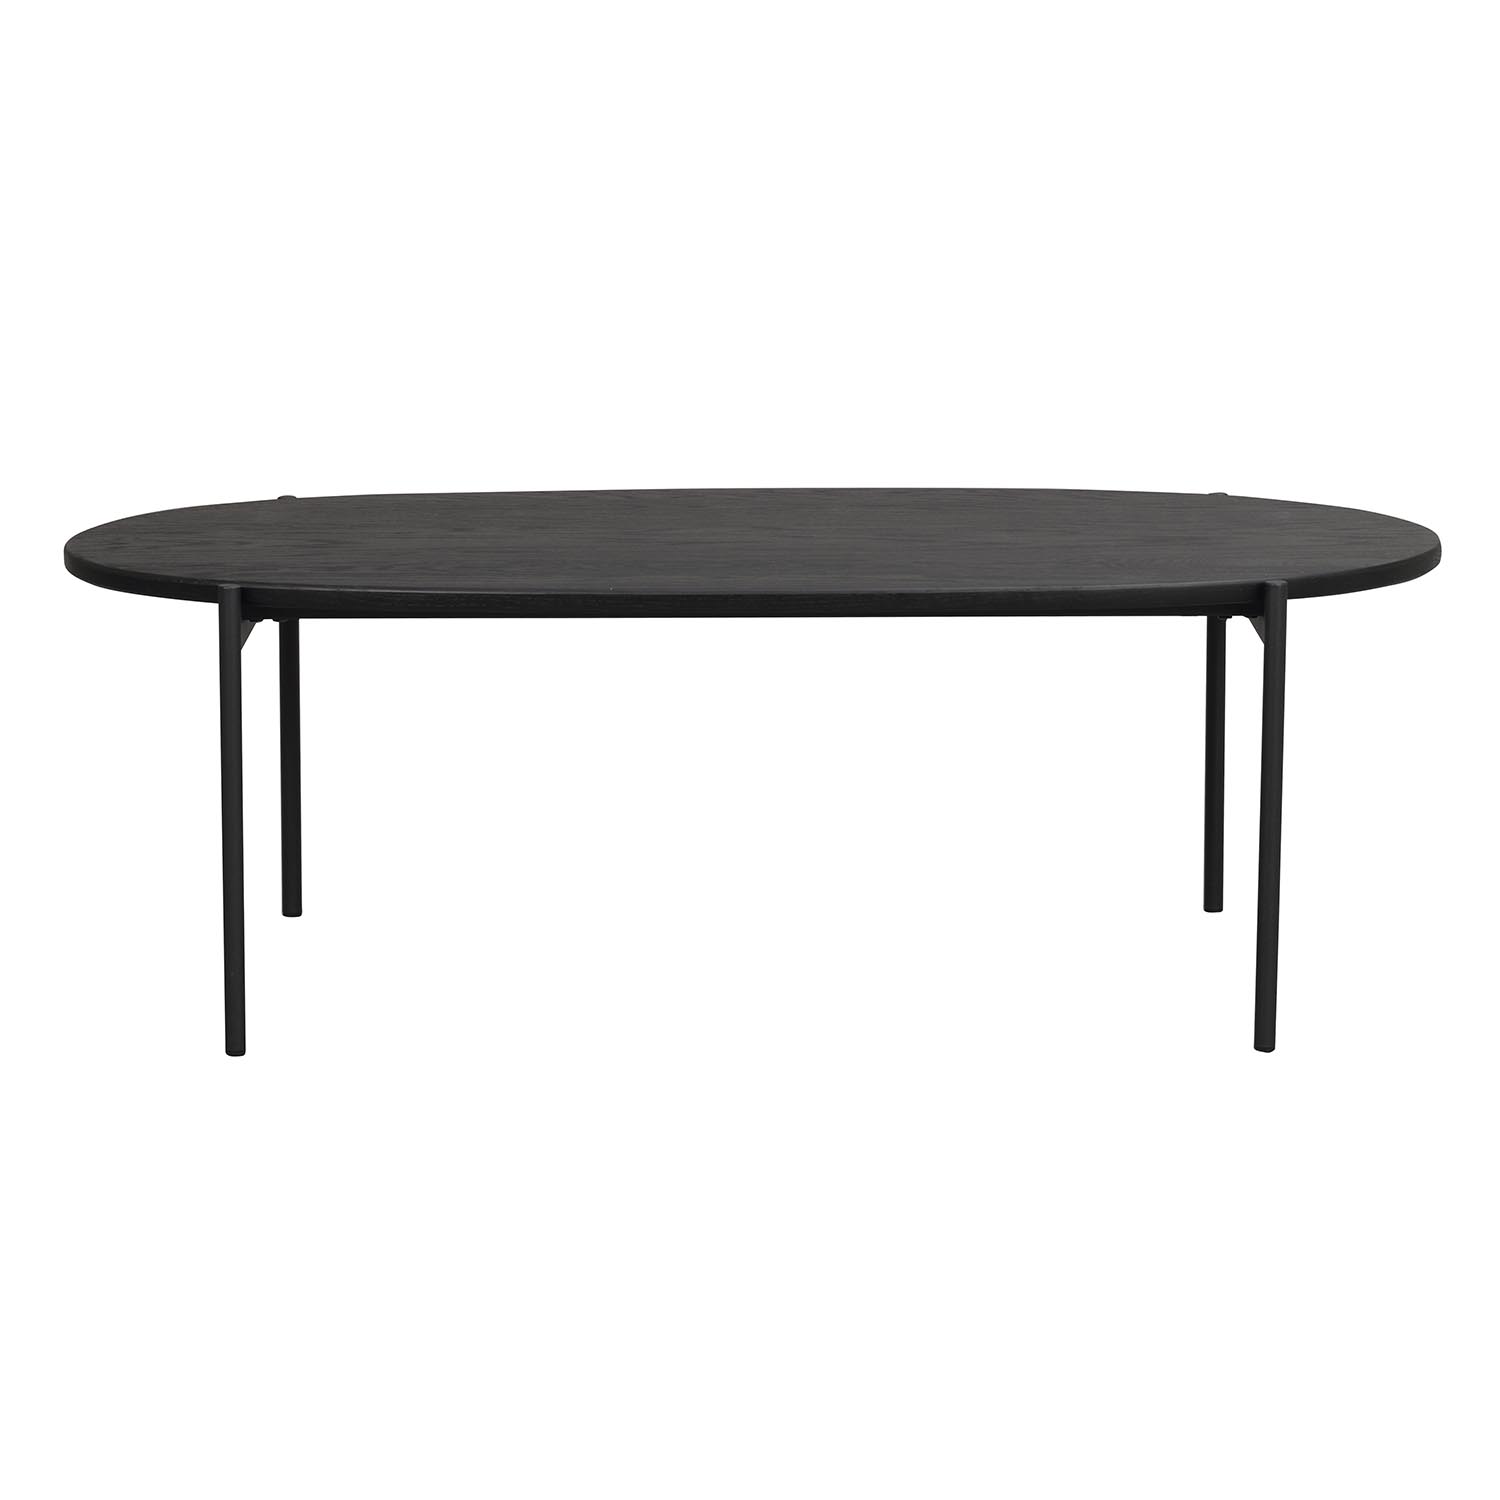 ROWICO oval Skye sofabord - sort egetræsfiner og sort metal (120x60)